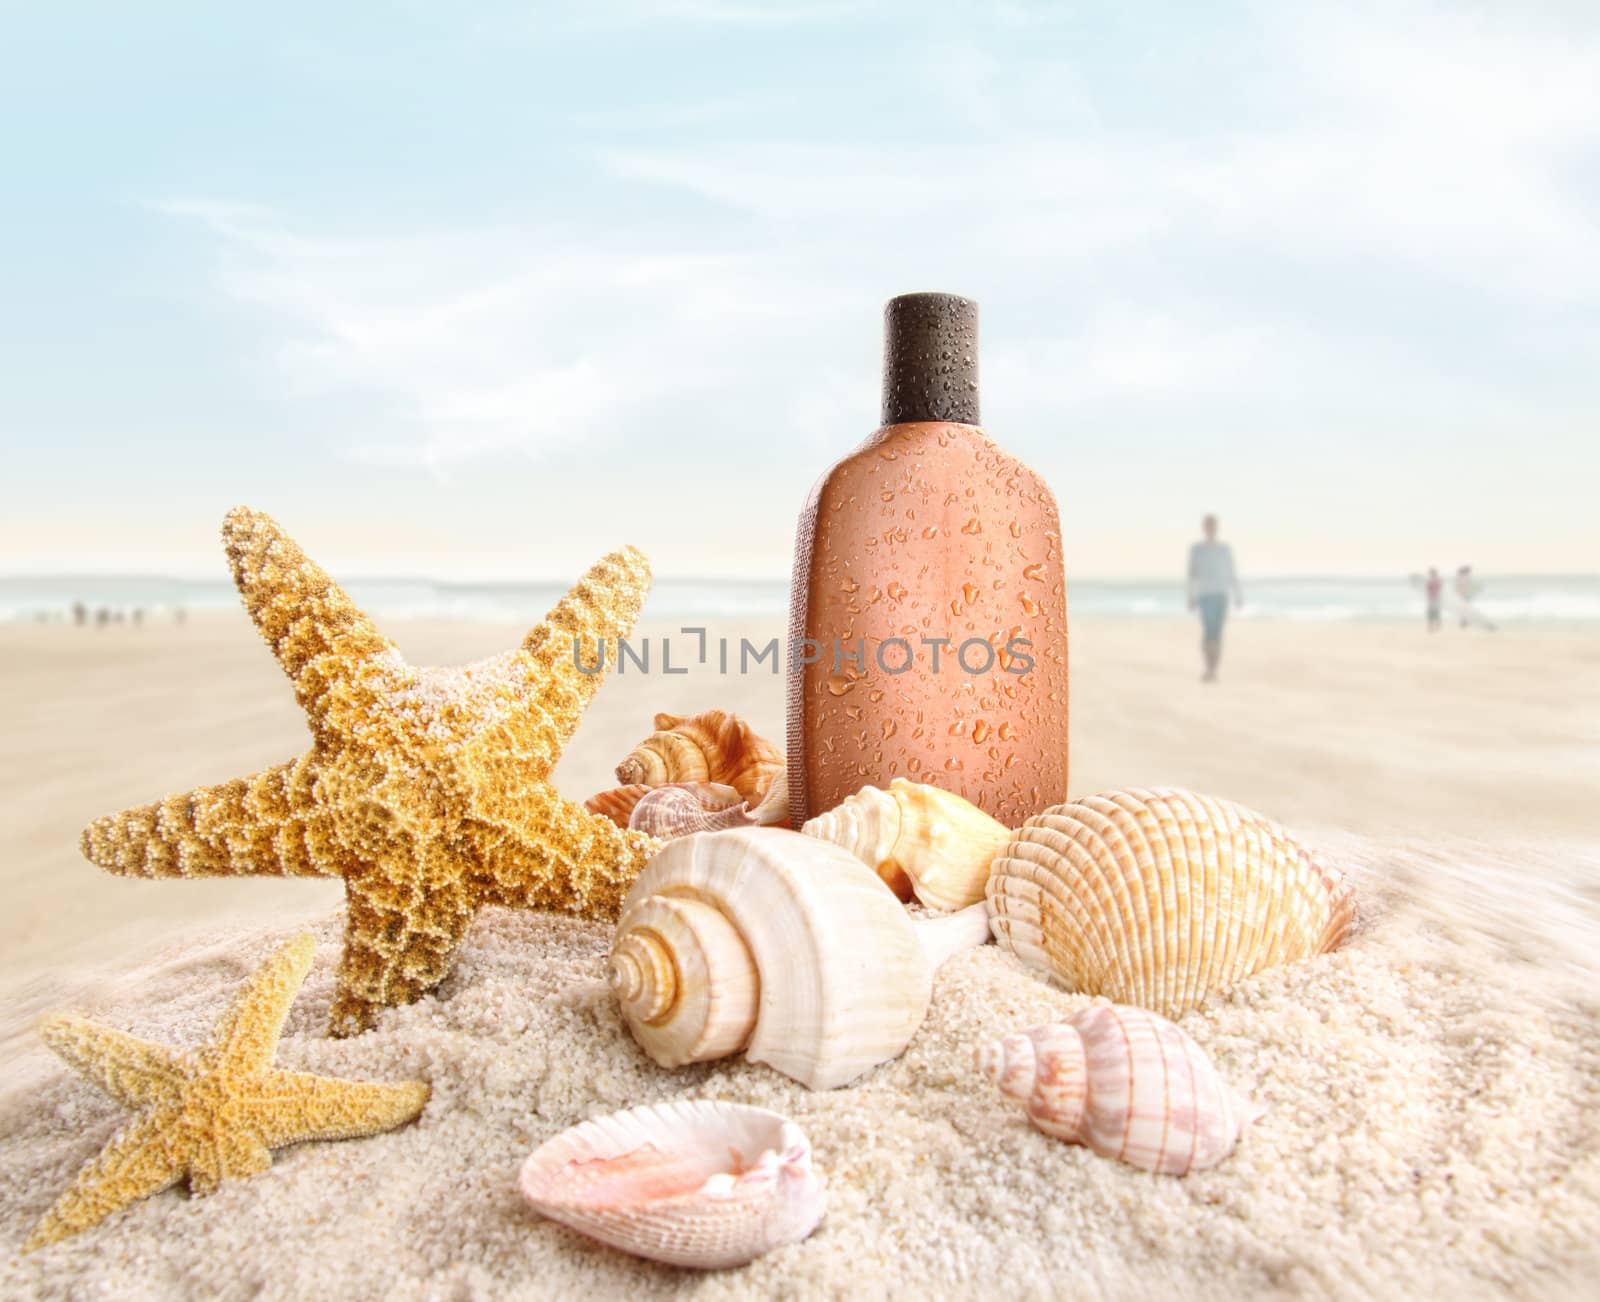 Suntan lotion and seashells on the beach by Sandralise